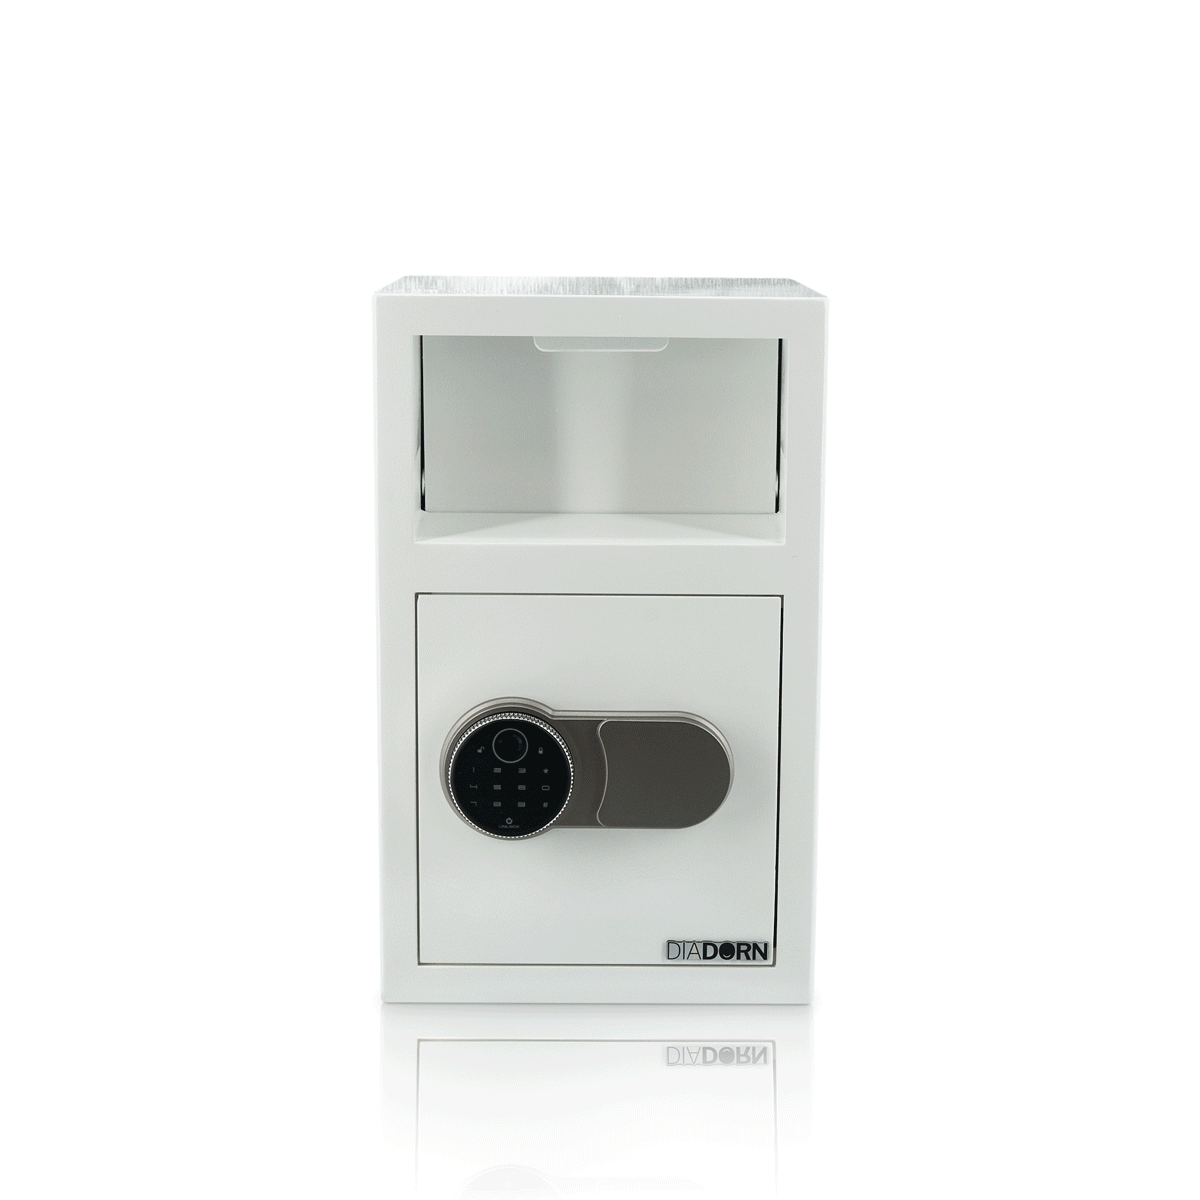 Afstortkluis met inwerpopening met vingerafdruk PIN-code slot | Vingerafdrukscanner | Hoogglans wit